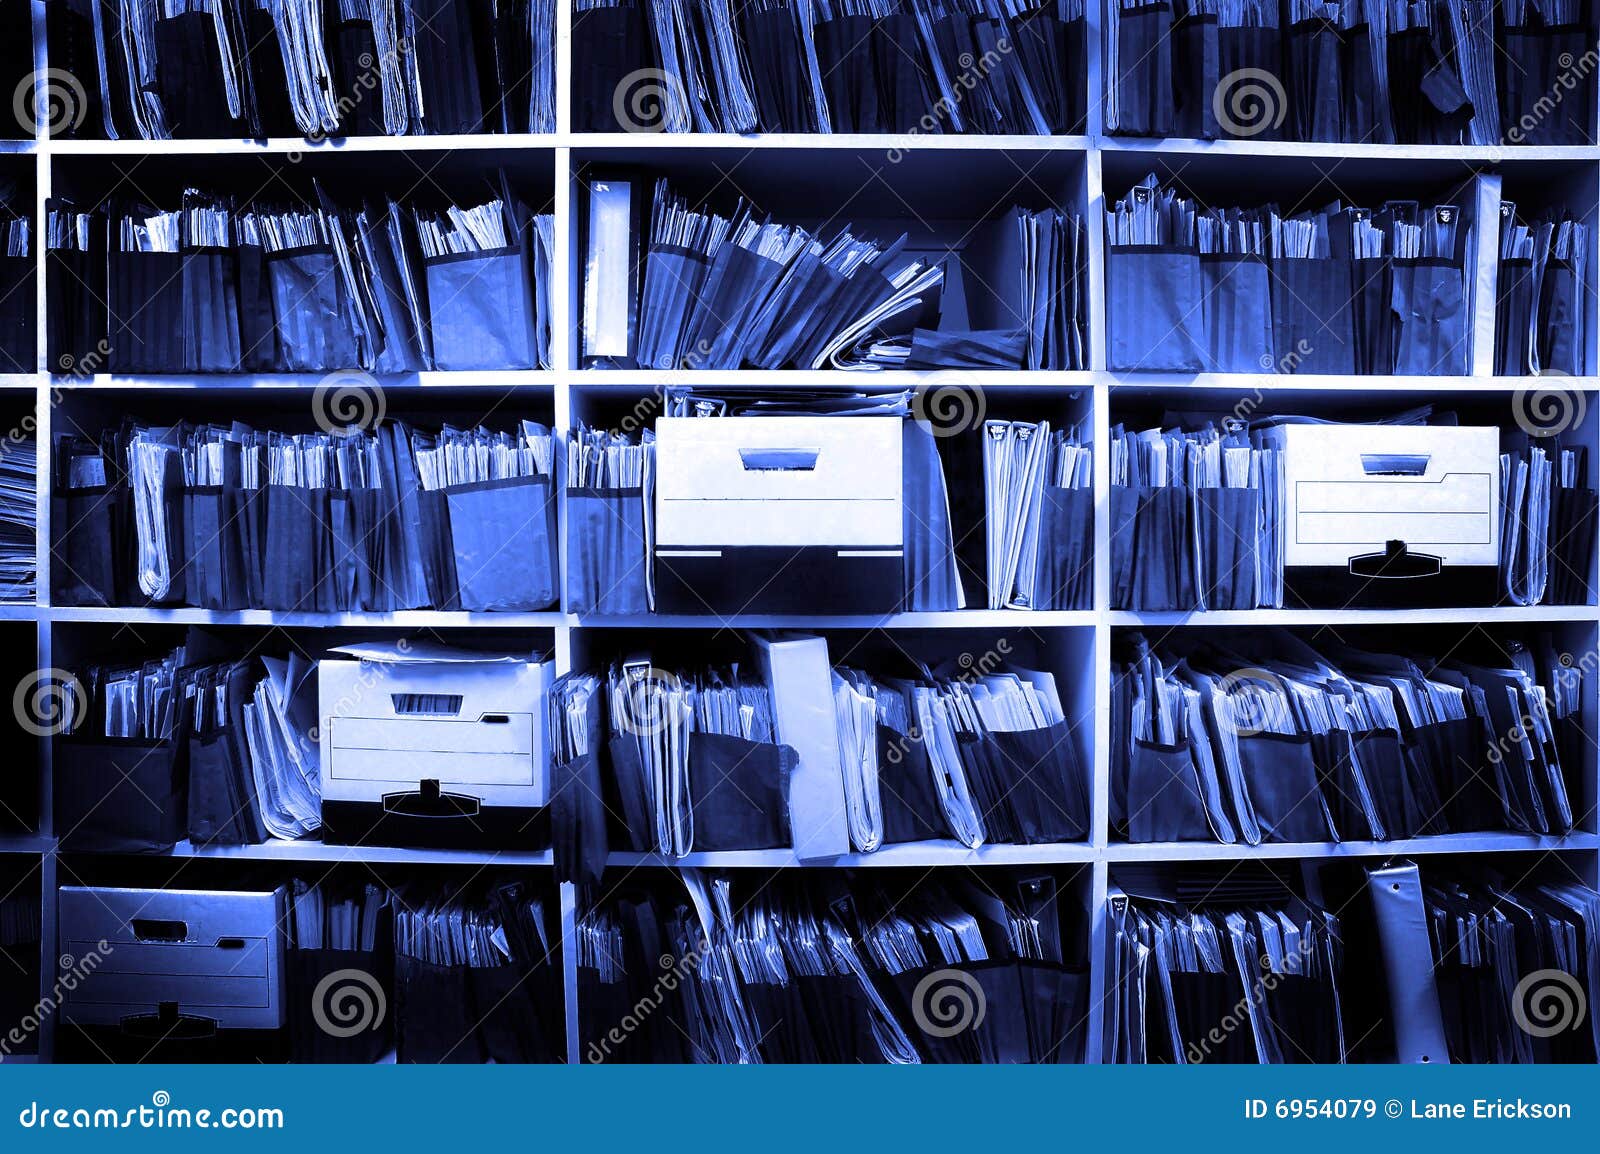 files on shelf